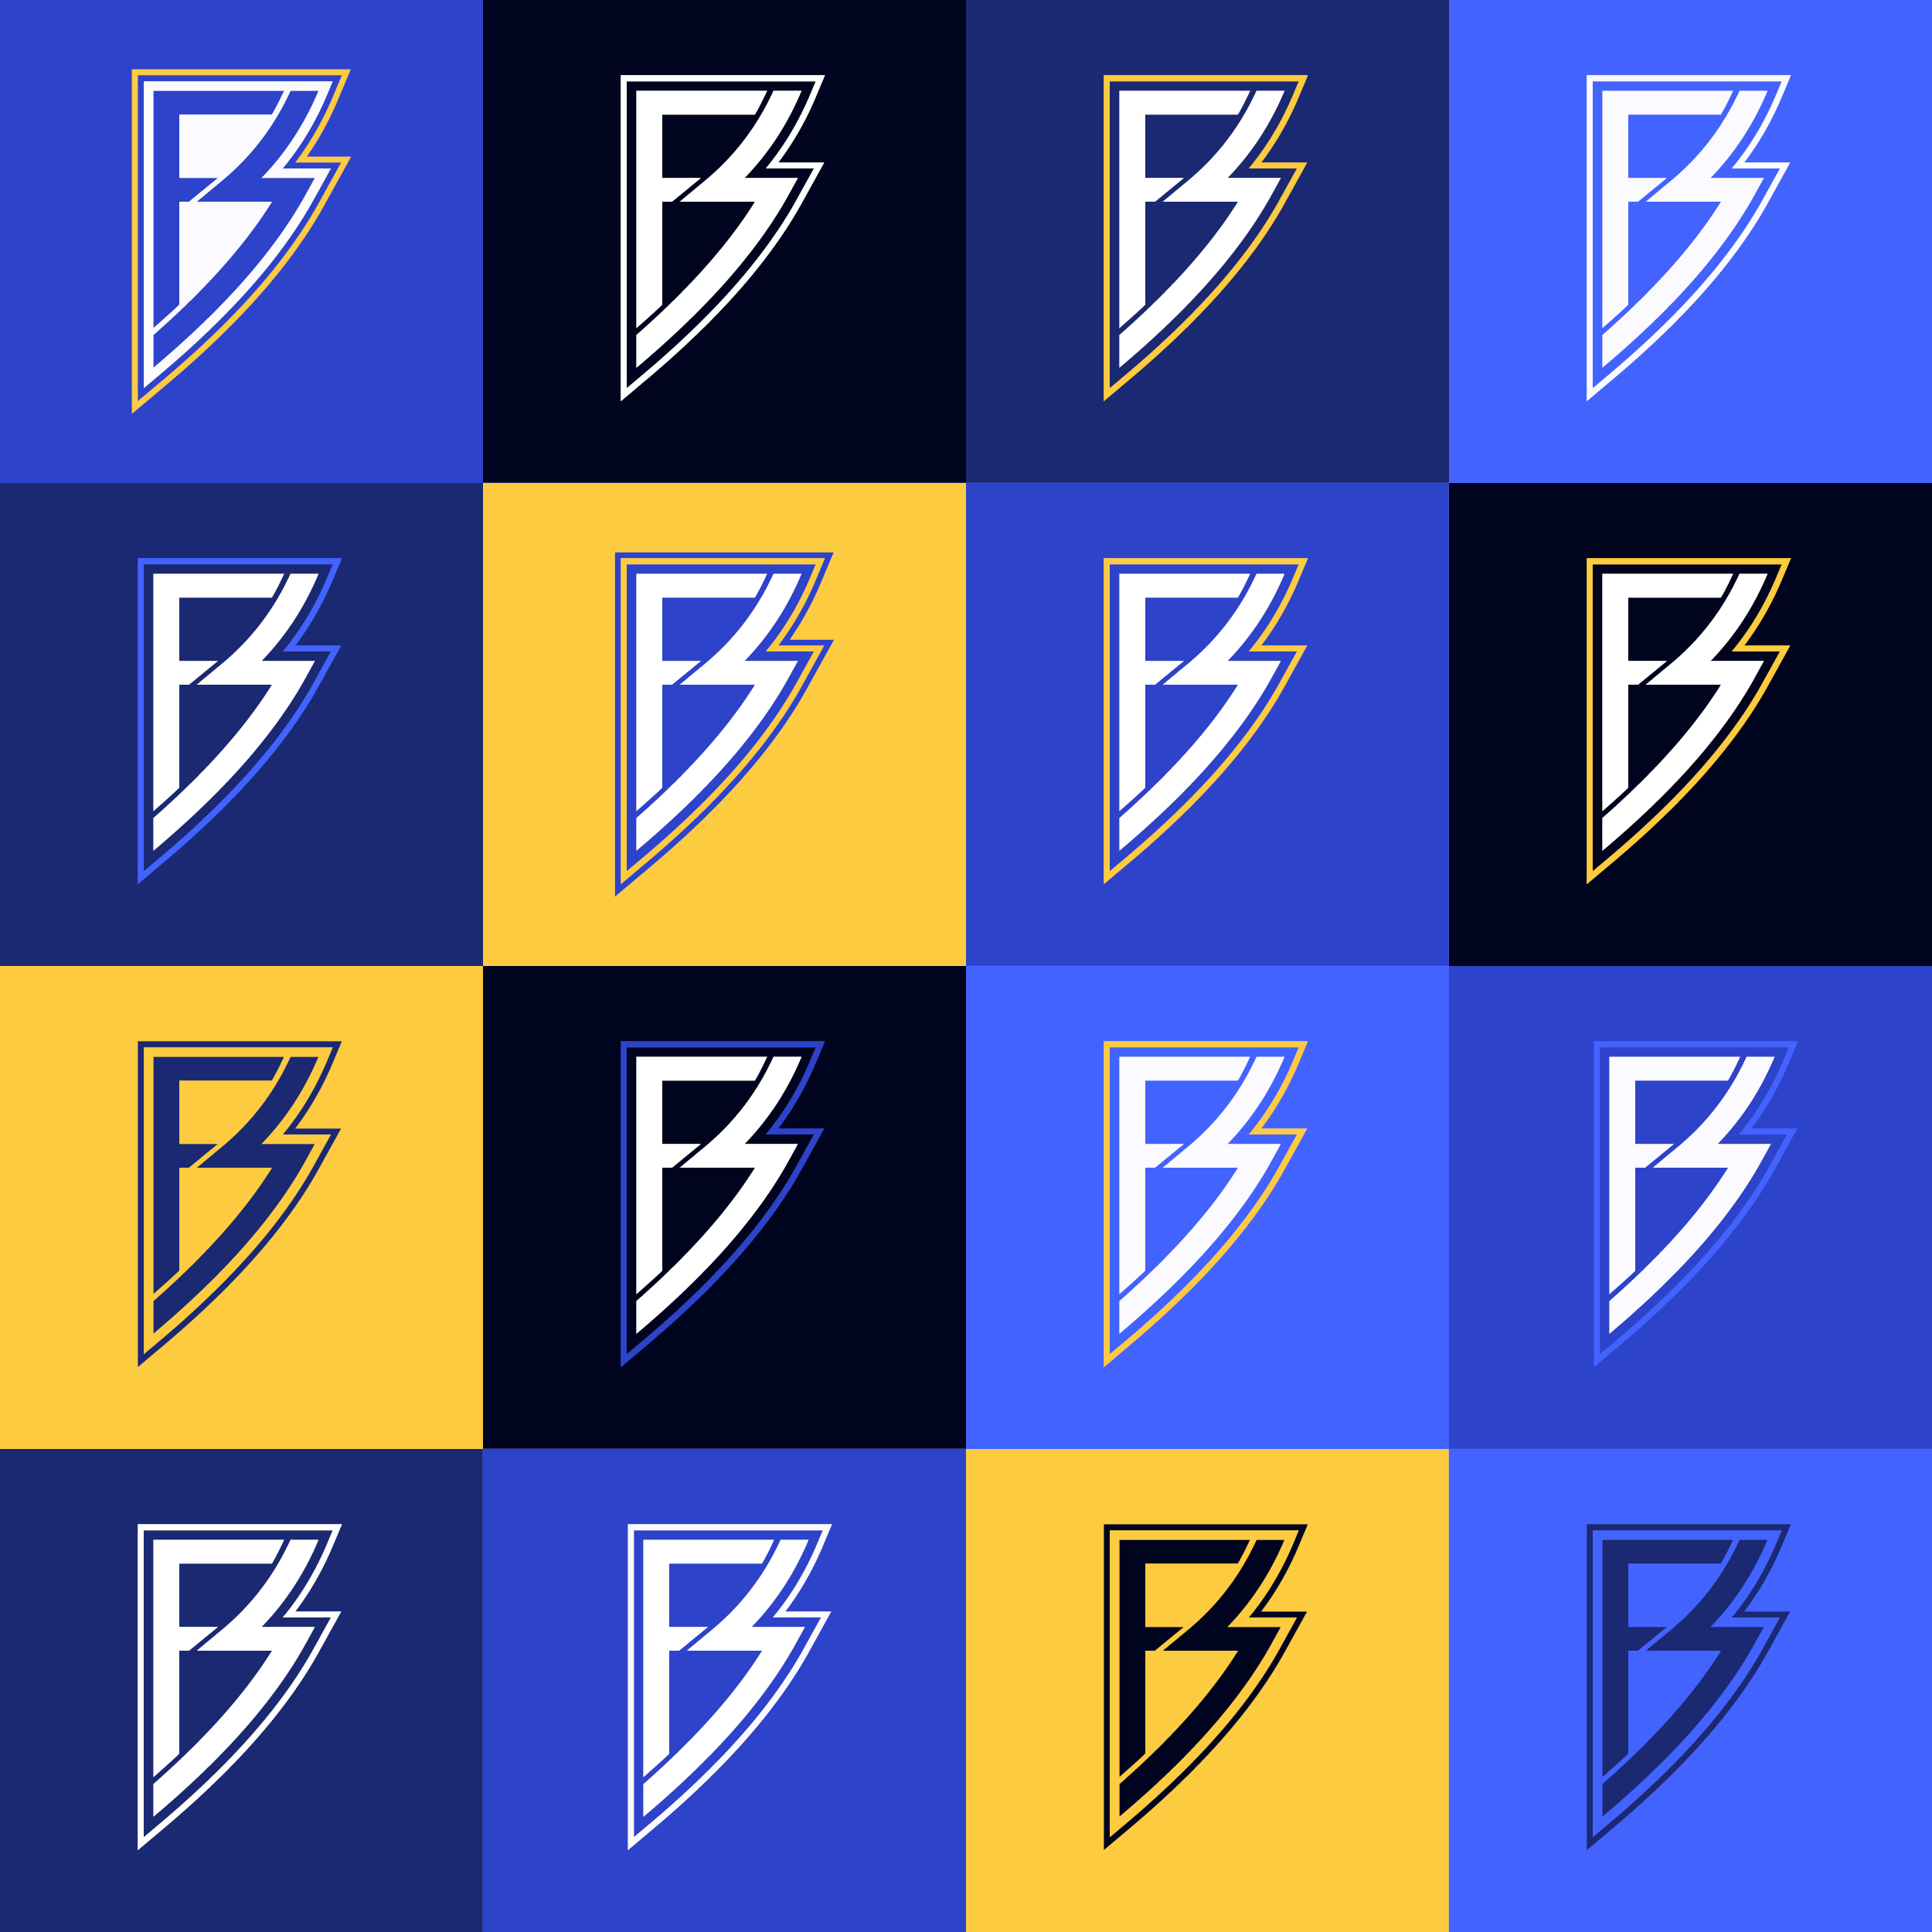 Ballers Soccer logo colour variations